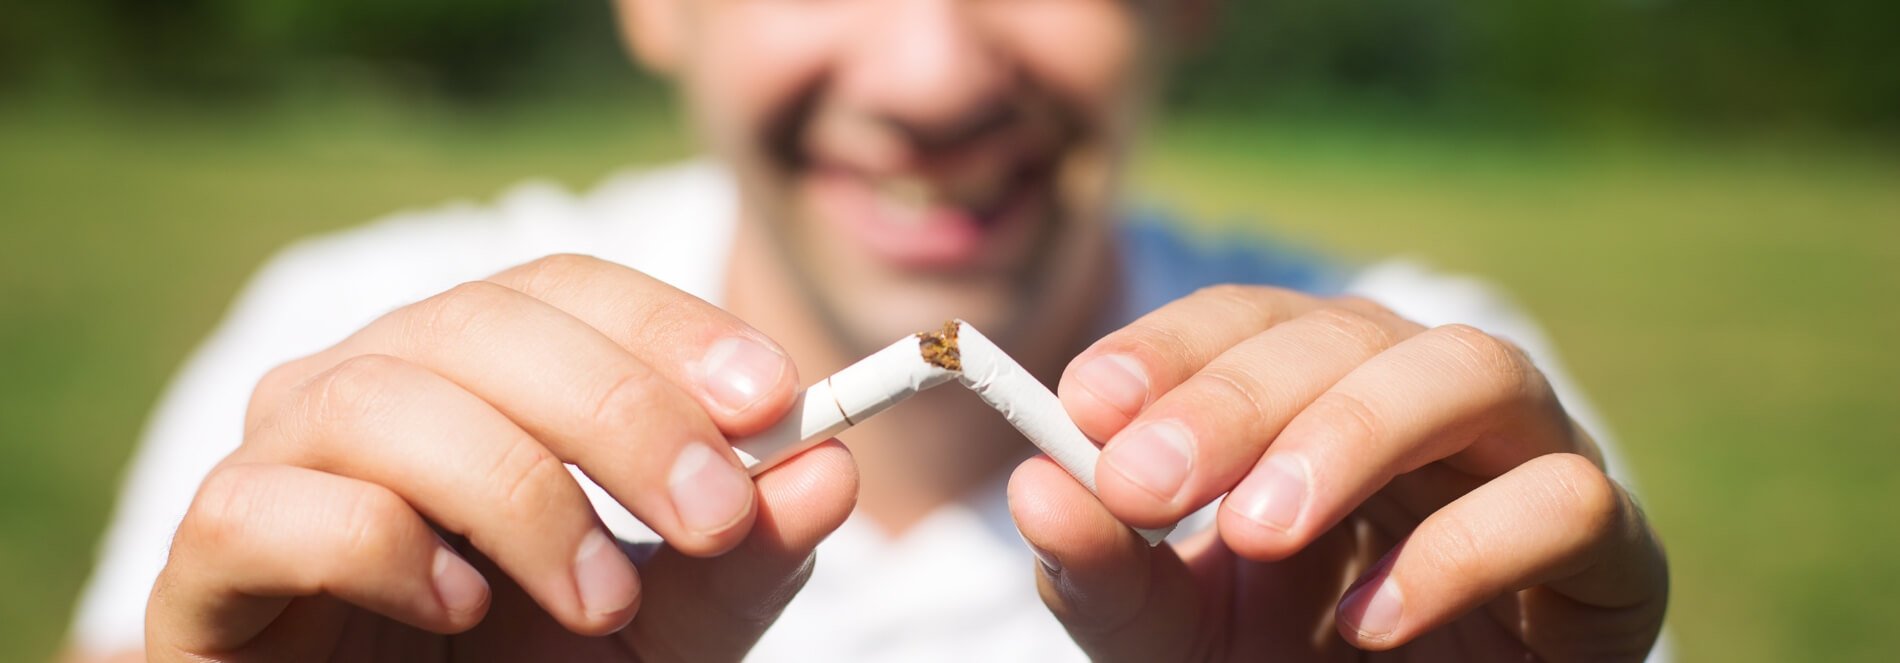 smoking effects male fertility